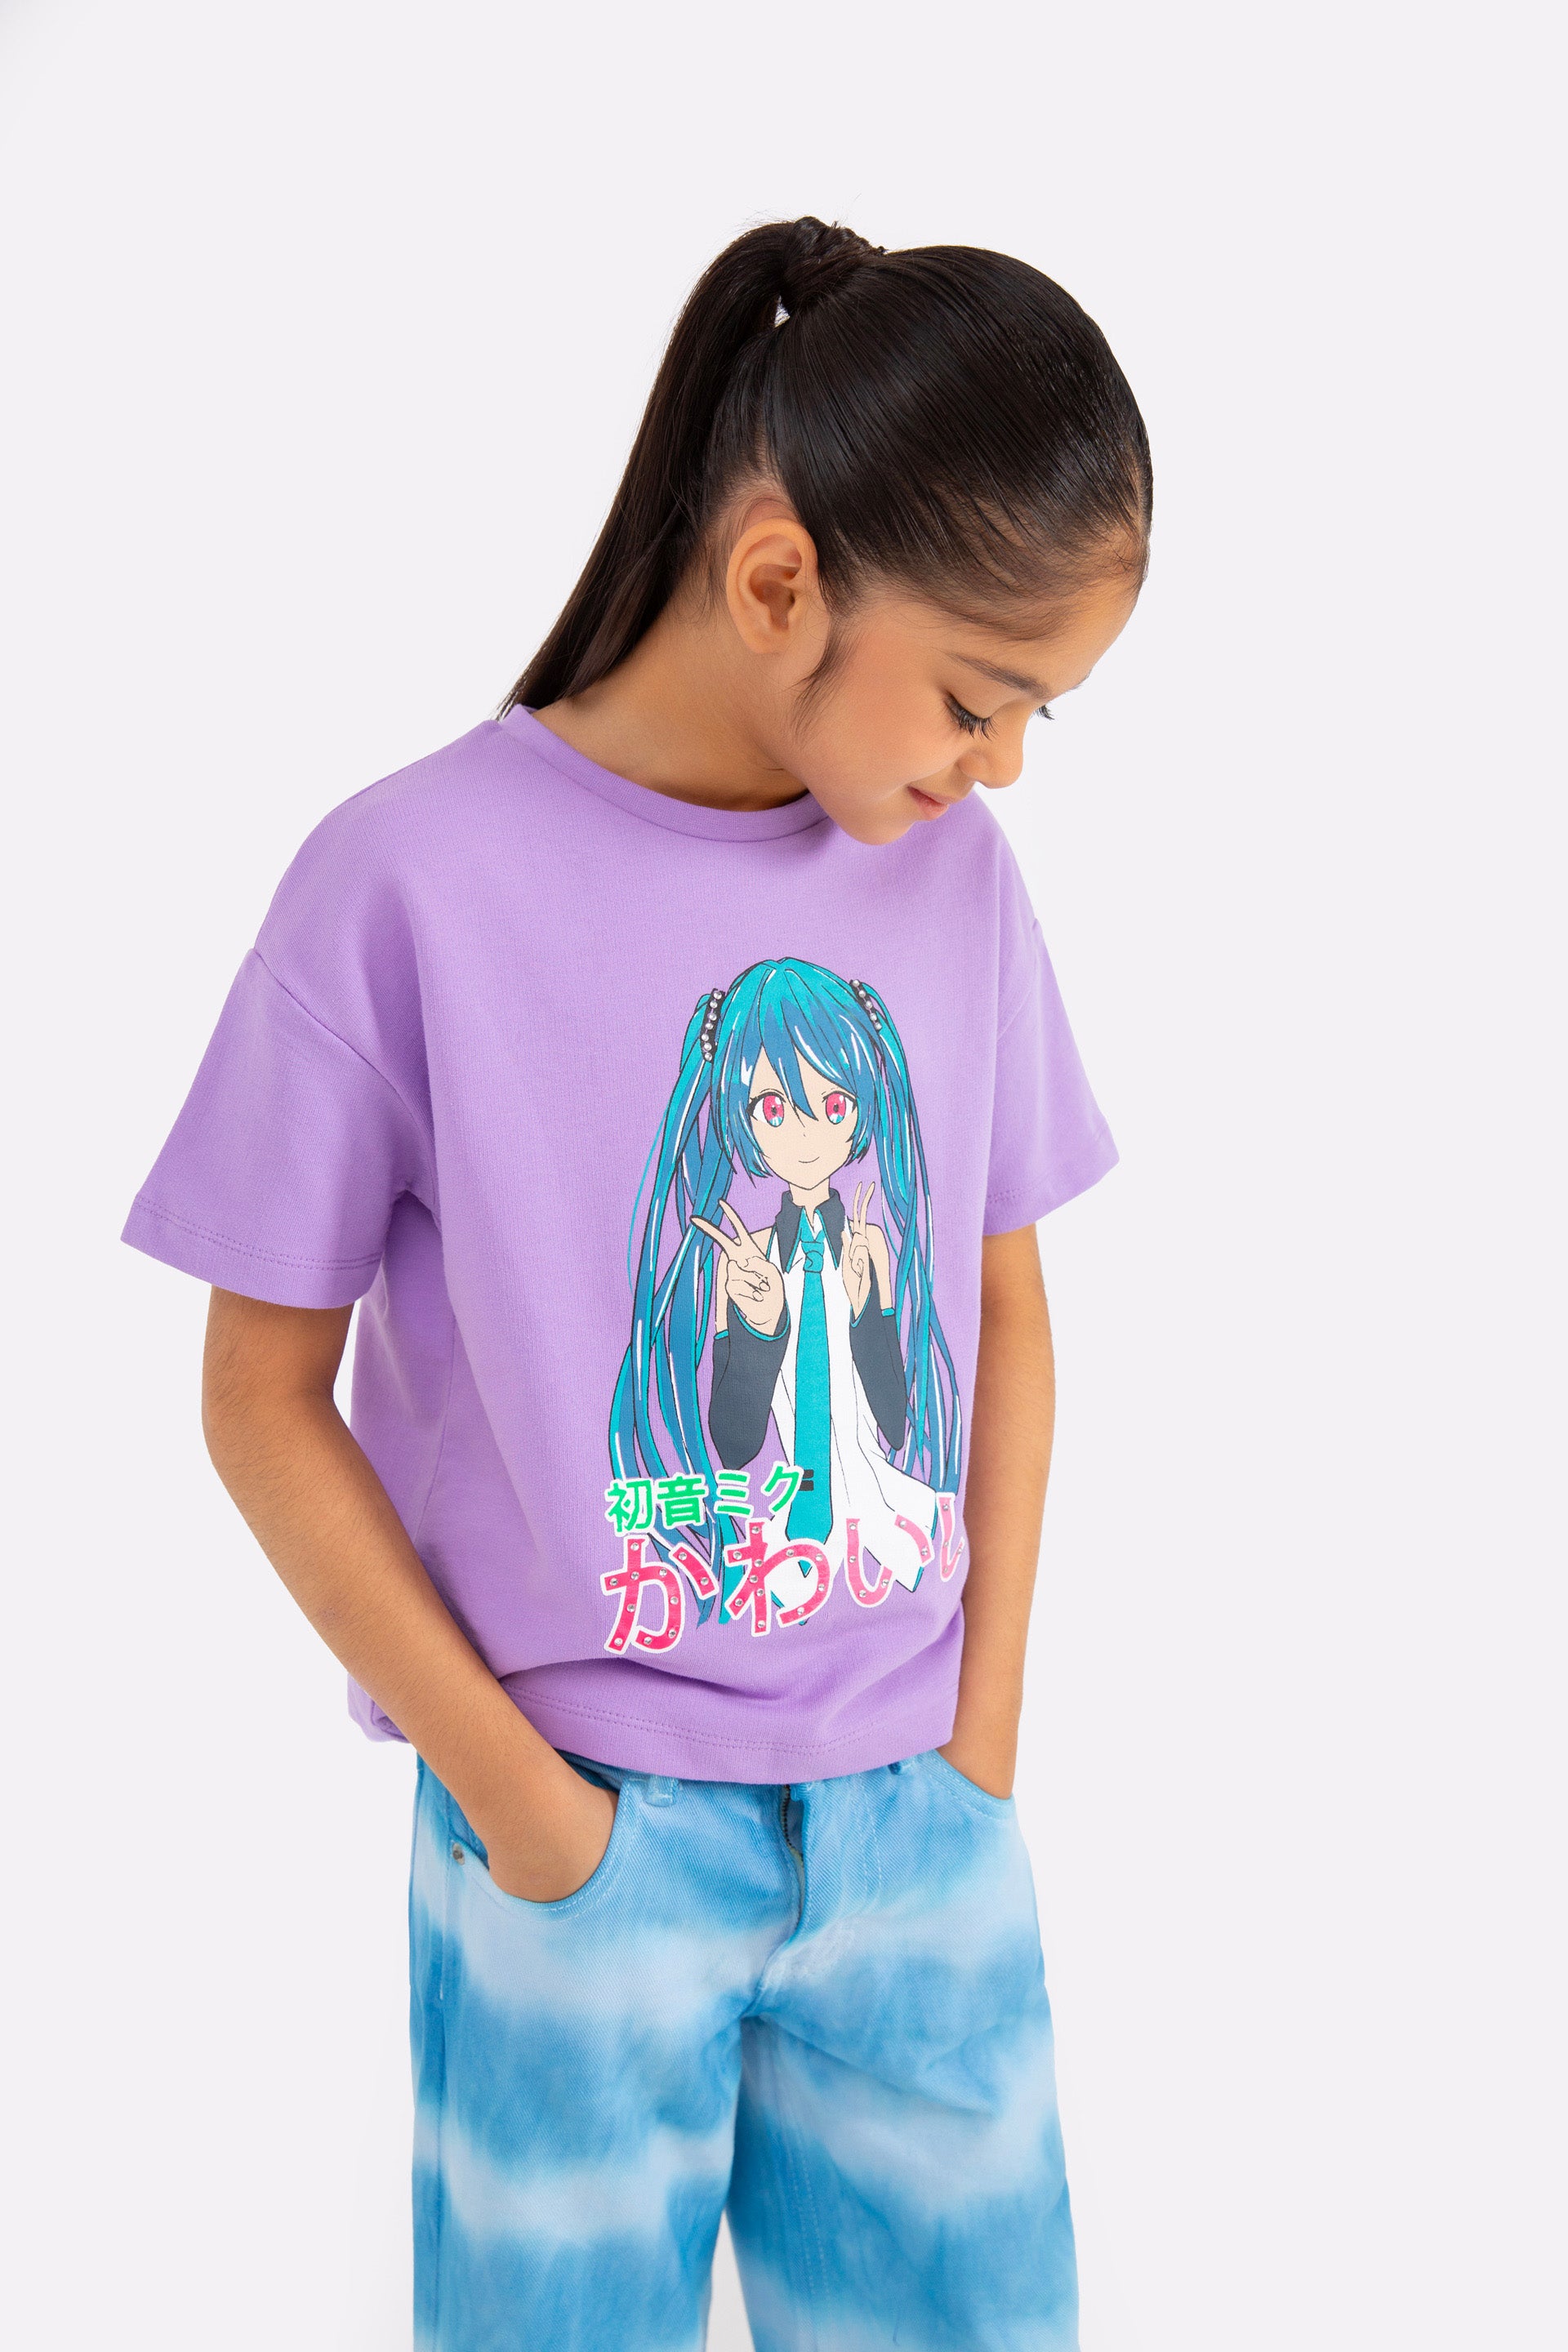 Buy Jujutsu Kaisen Anime Graphic Tee Manga Hip Hop Unisex Oversized T Shirt  Harajuku at affordable prices — free shipping, real reviews with photos —  Joom